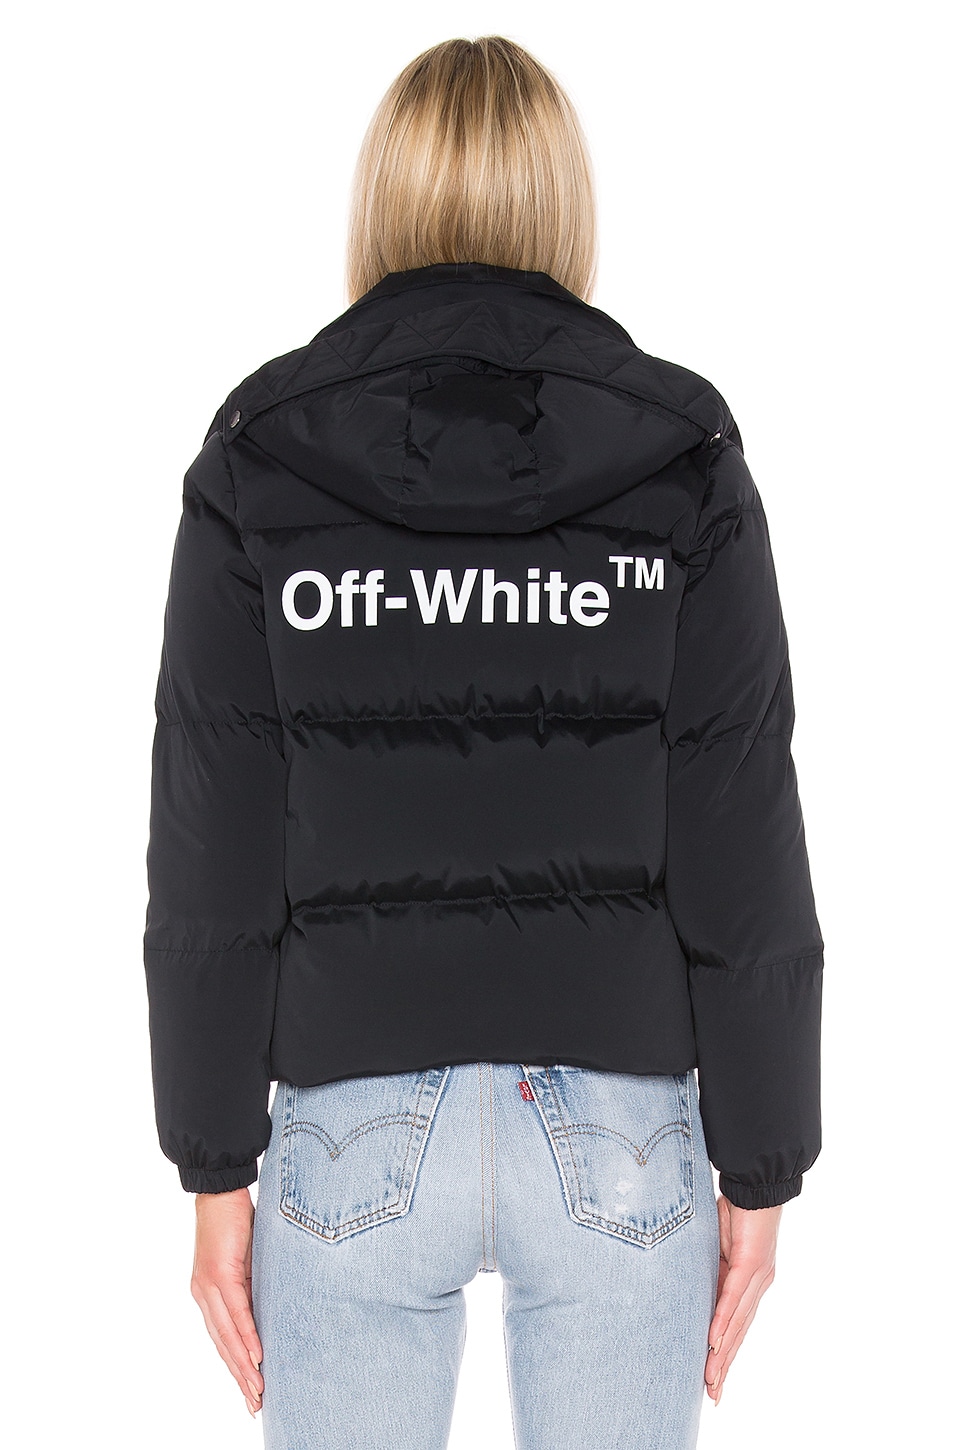 OFF-WHITE Down Jacket in Black & White | REVOLVE